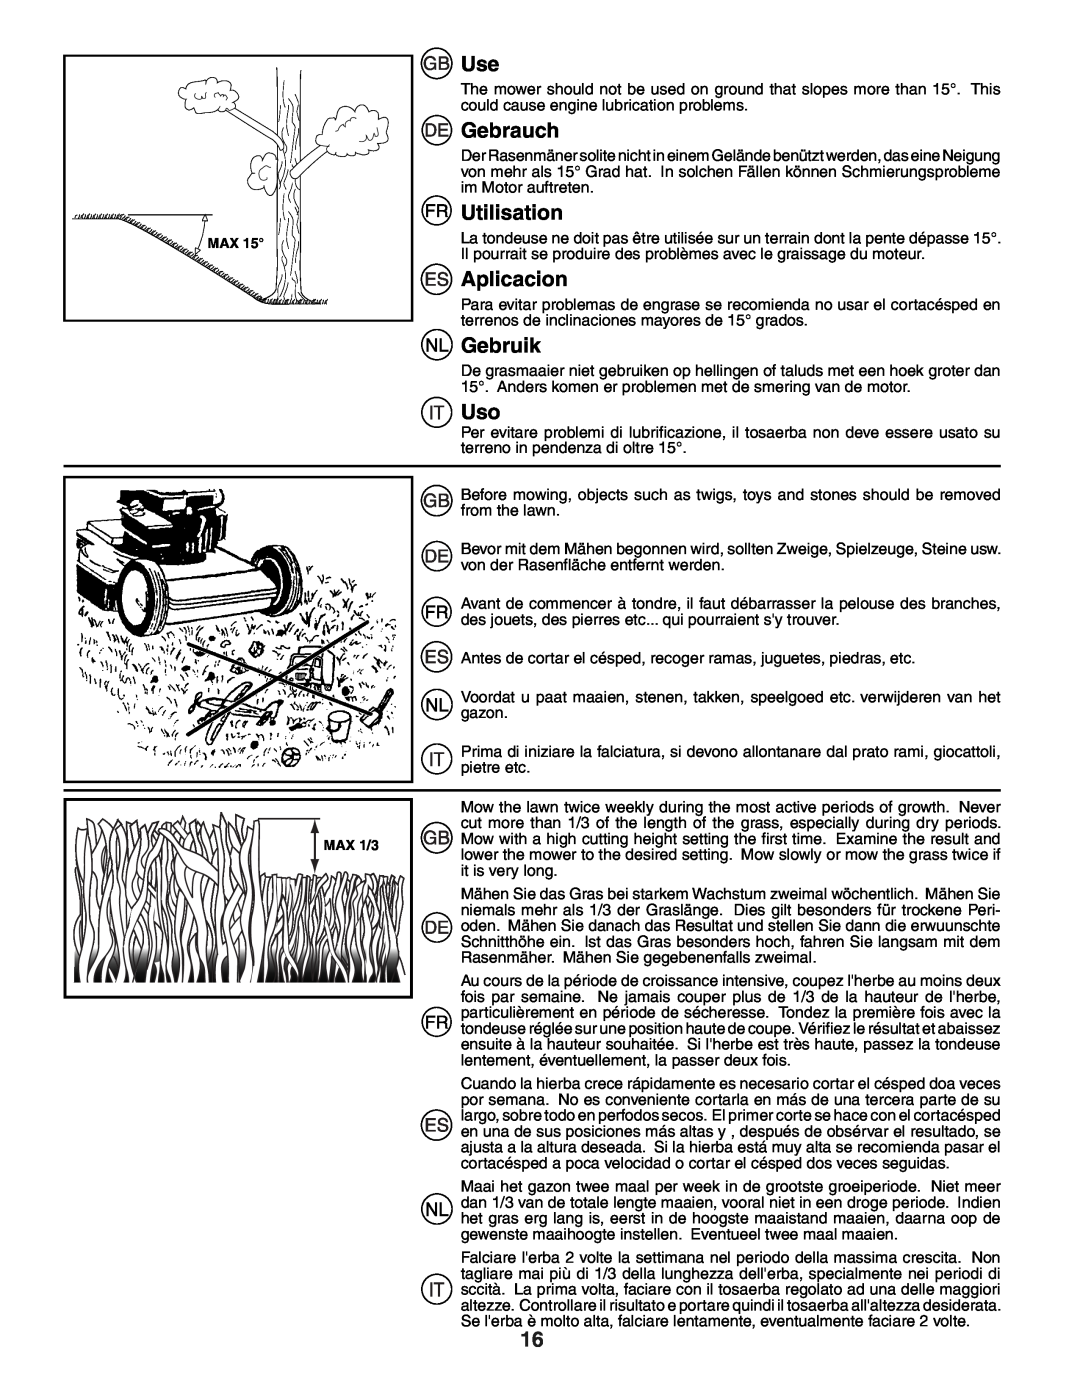 Husqvarna J50 instruction manual Gebrauch, Utilisation, Aplicacion, Gebruik, MAX 1/3 